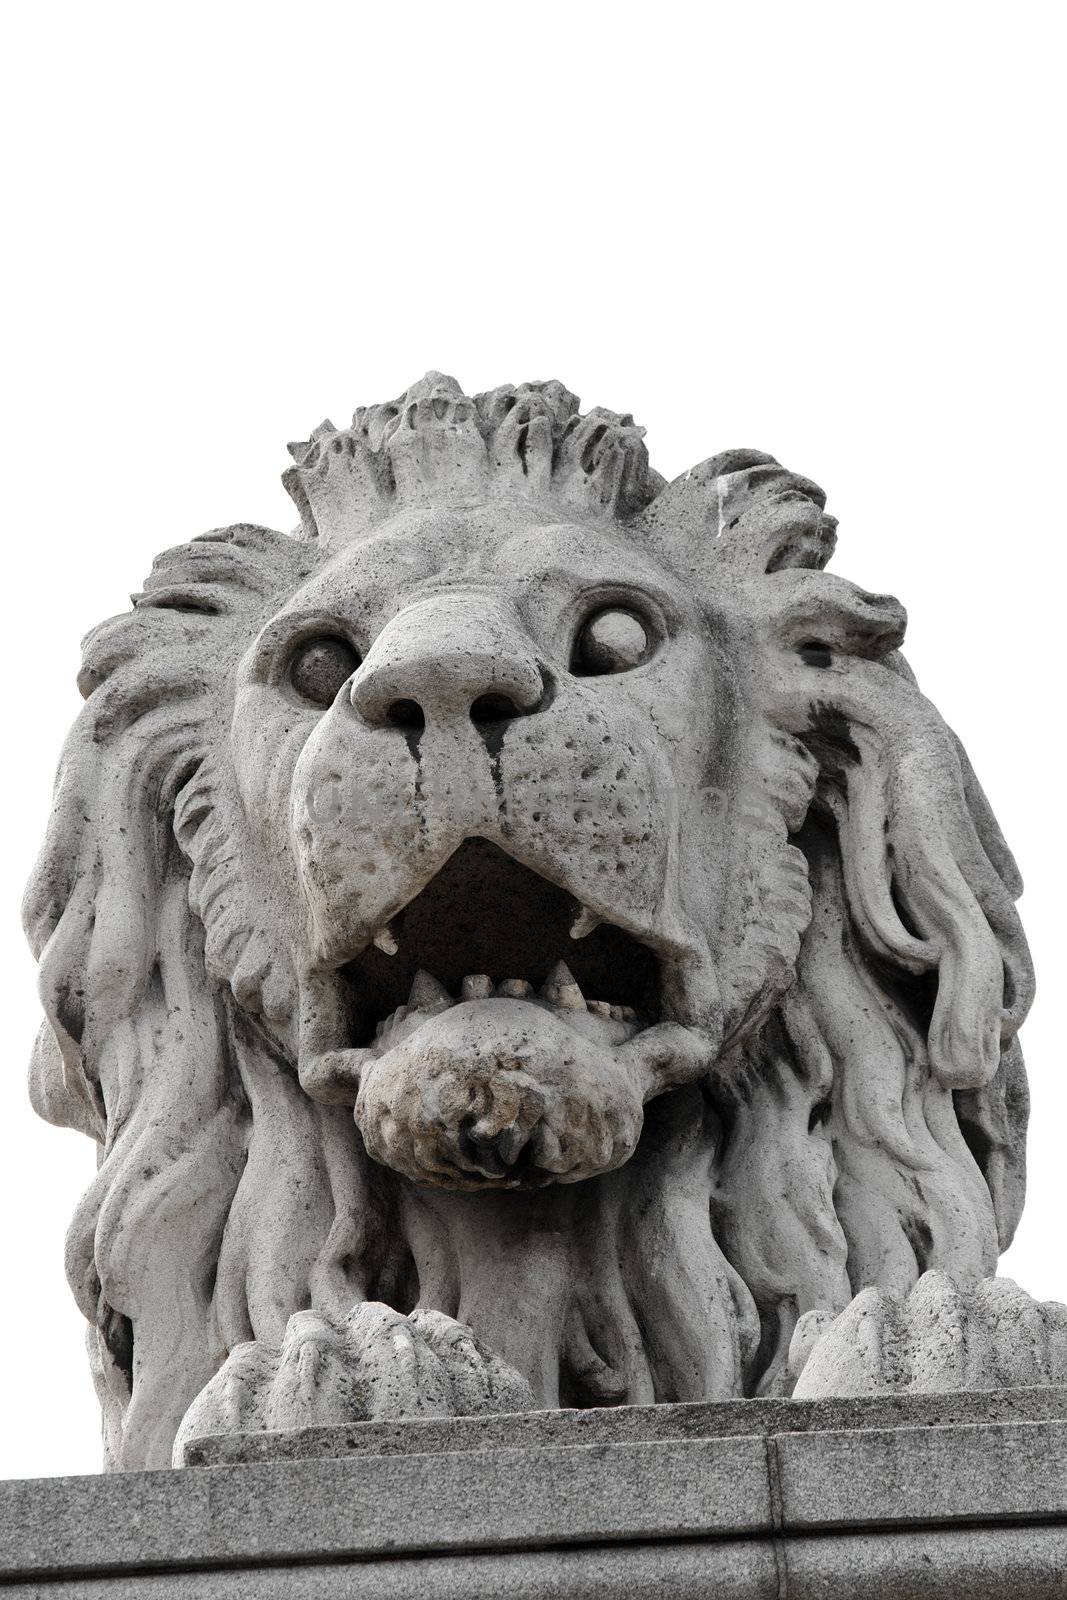 roaring stone lion sculpture closeup